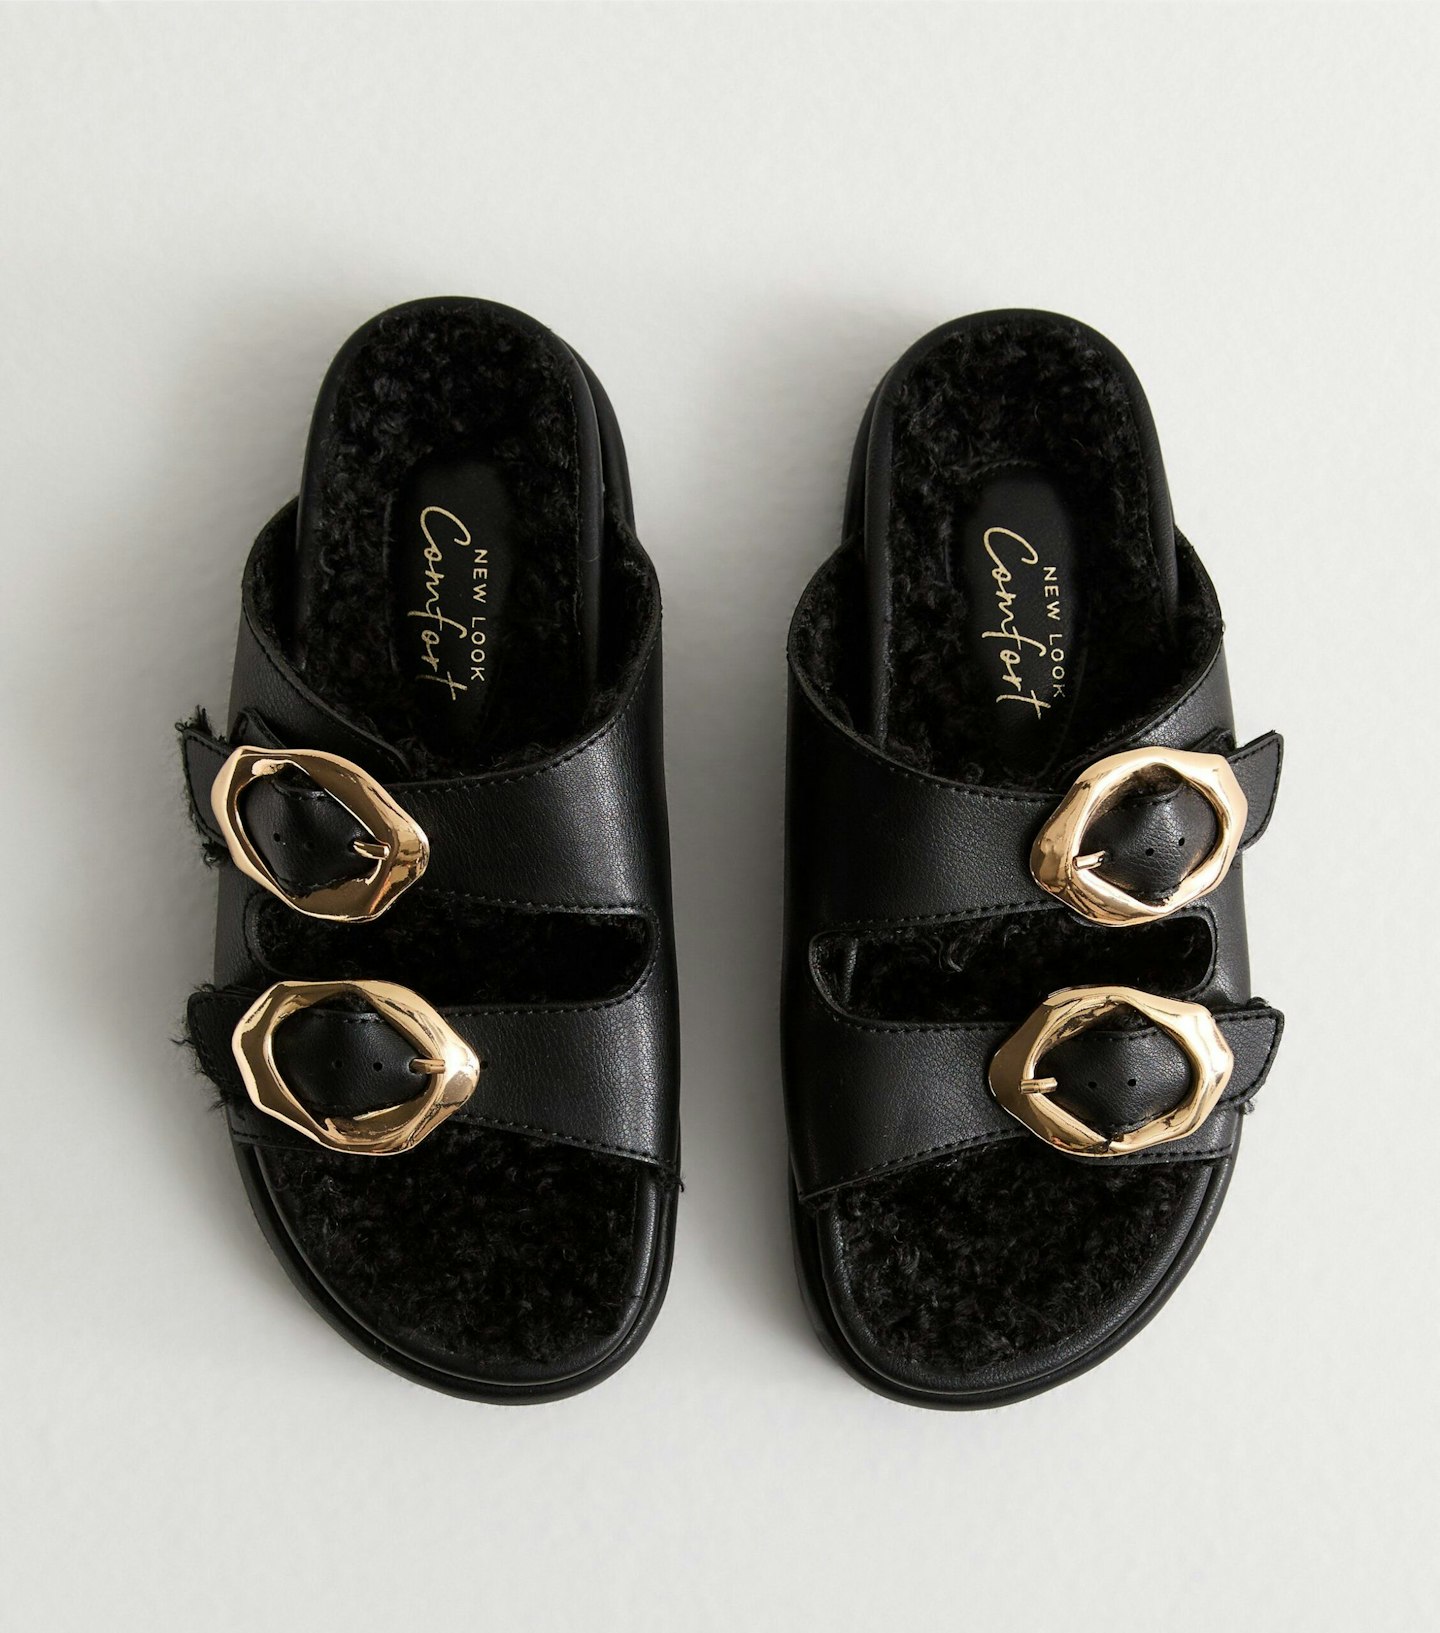 New Look Black Faux-Fur Trim Flat Leather Look Sandals